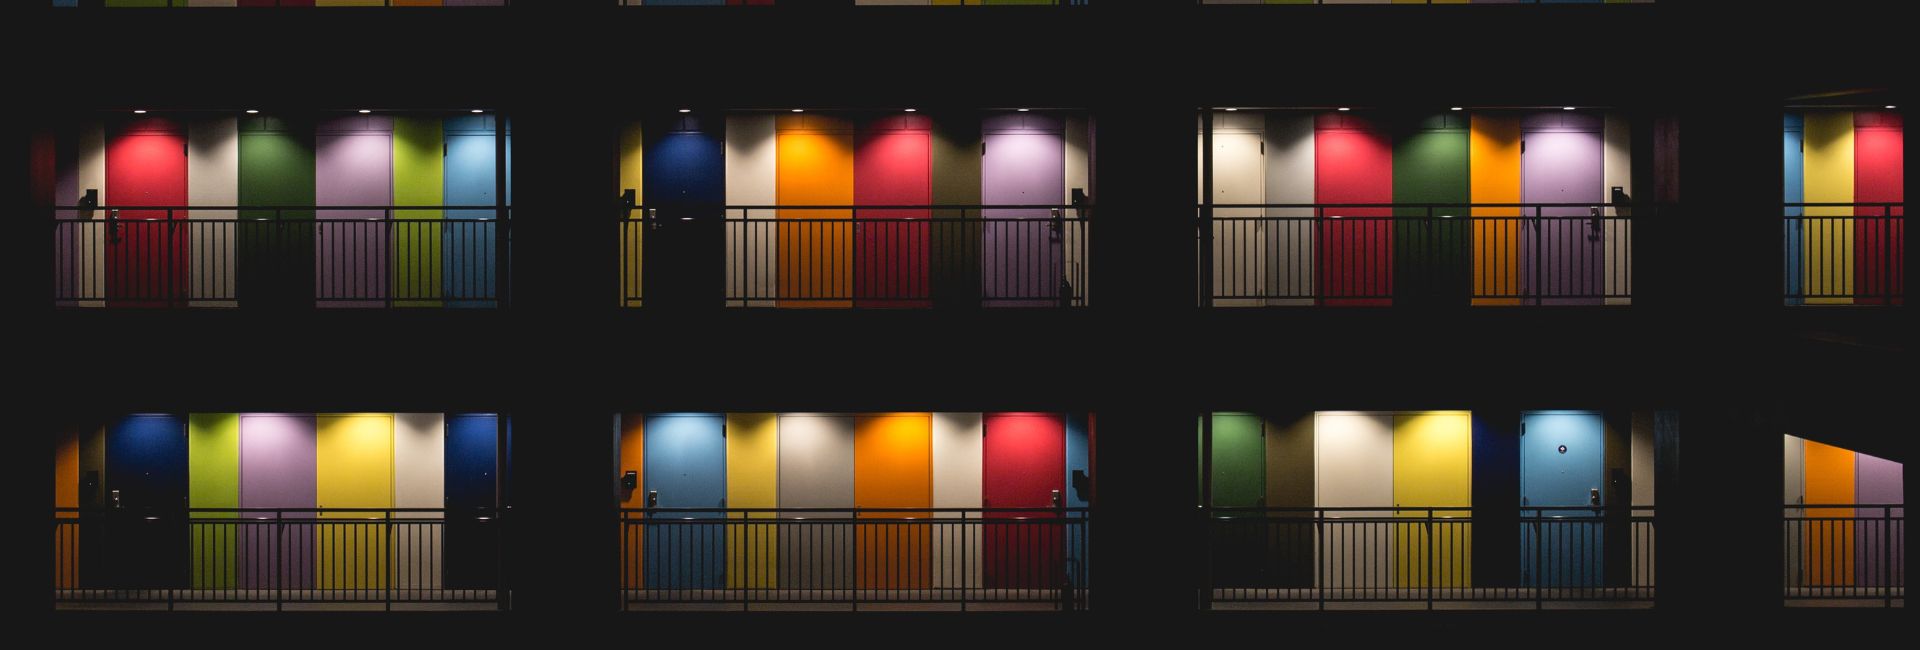 Colorful doors of Odaiba